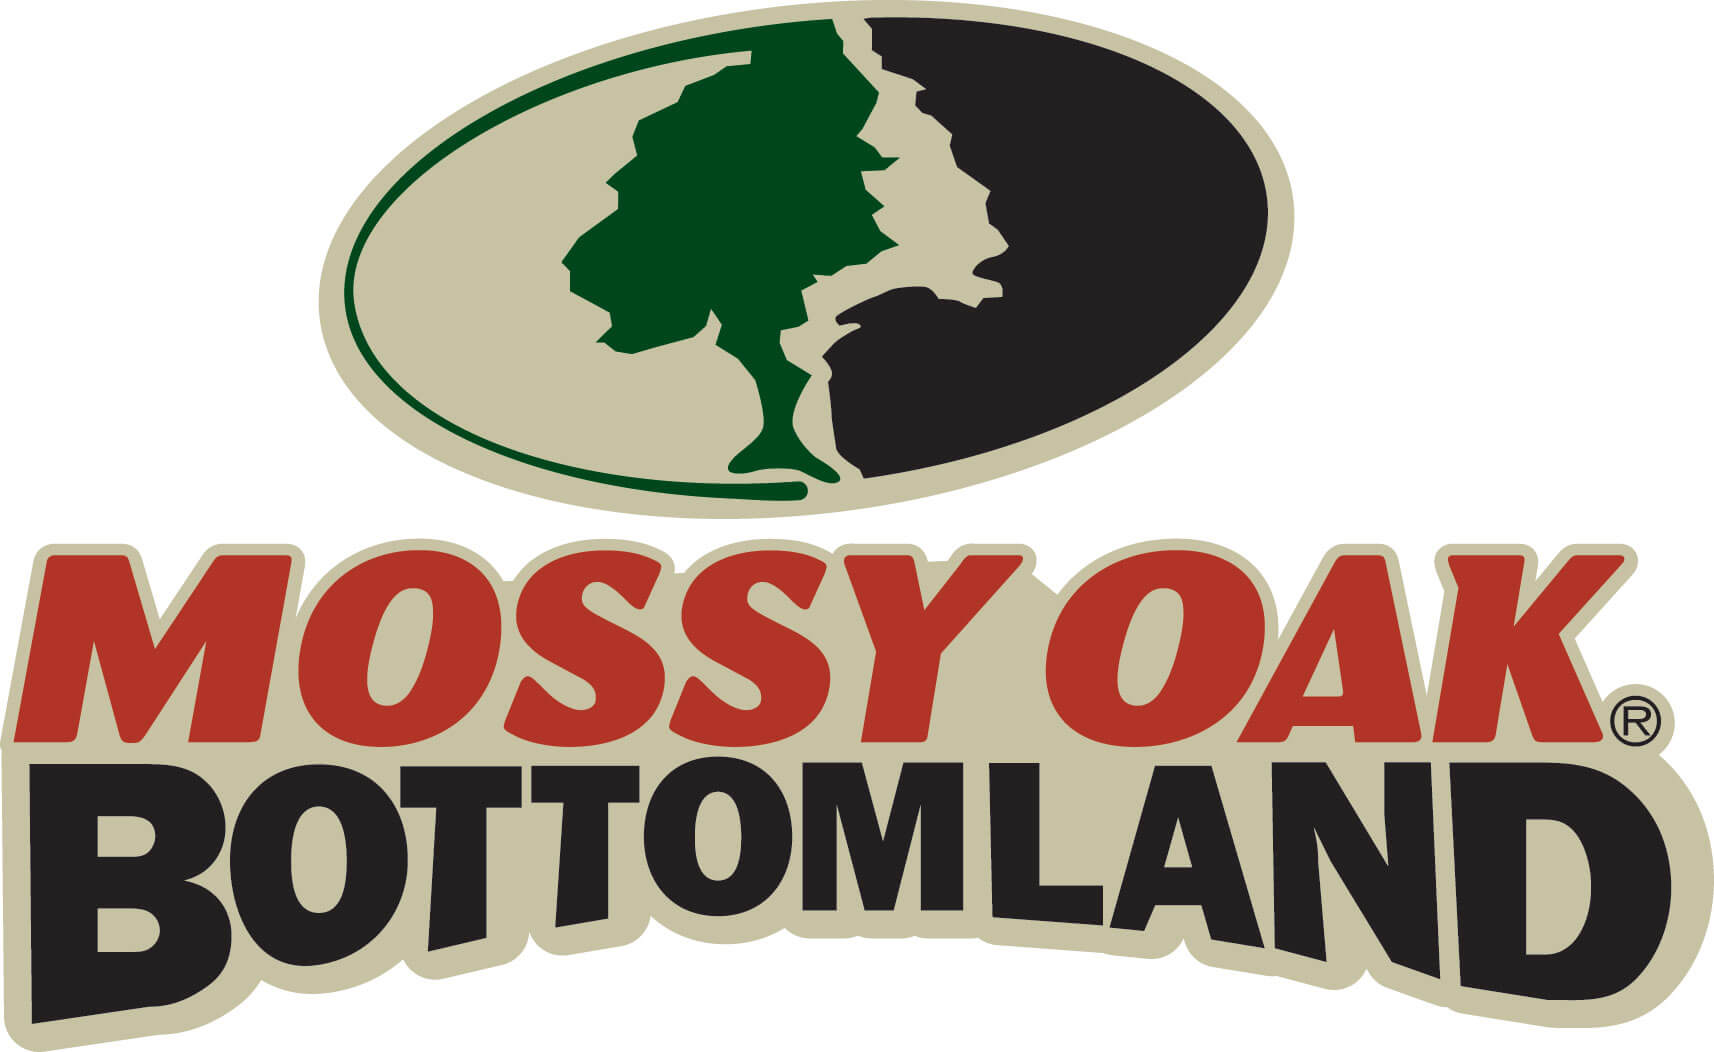 Mossy Oak® Bottomland Camo – Spitbud